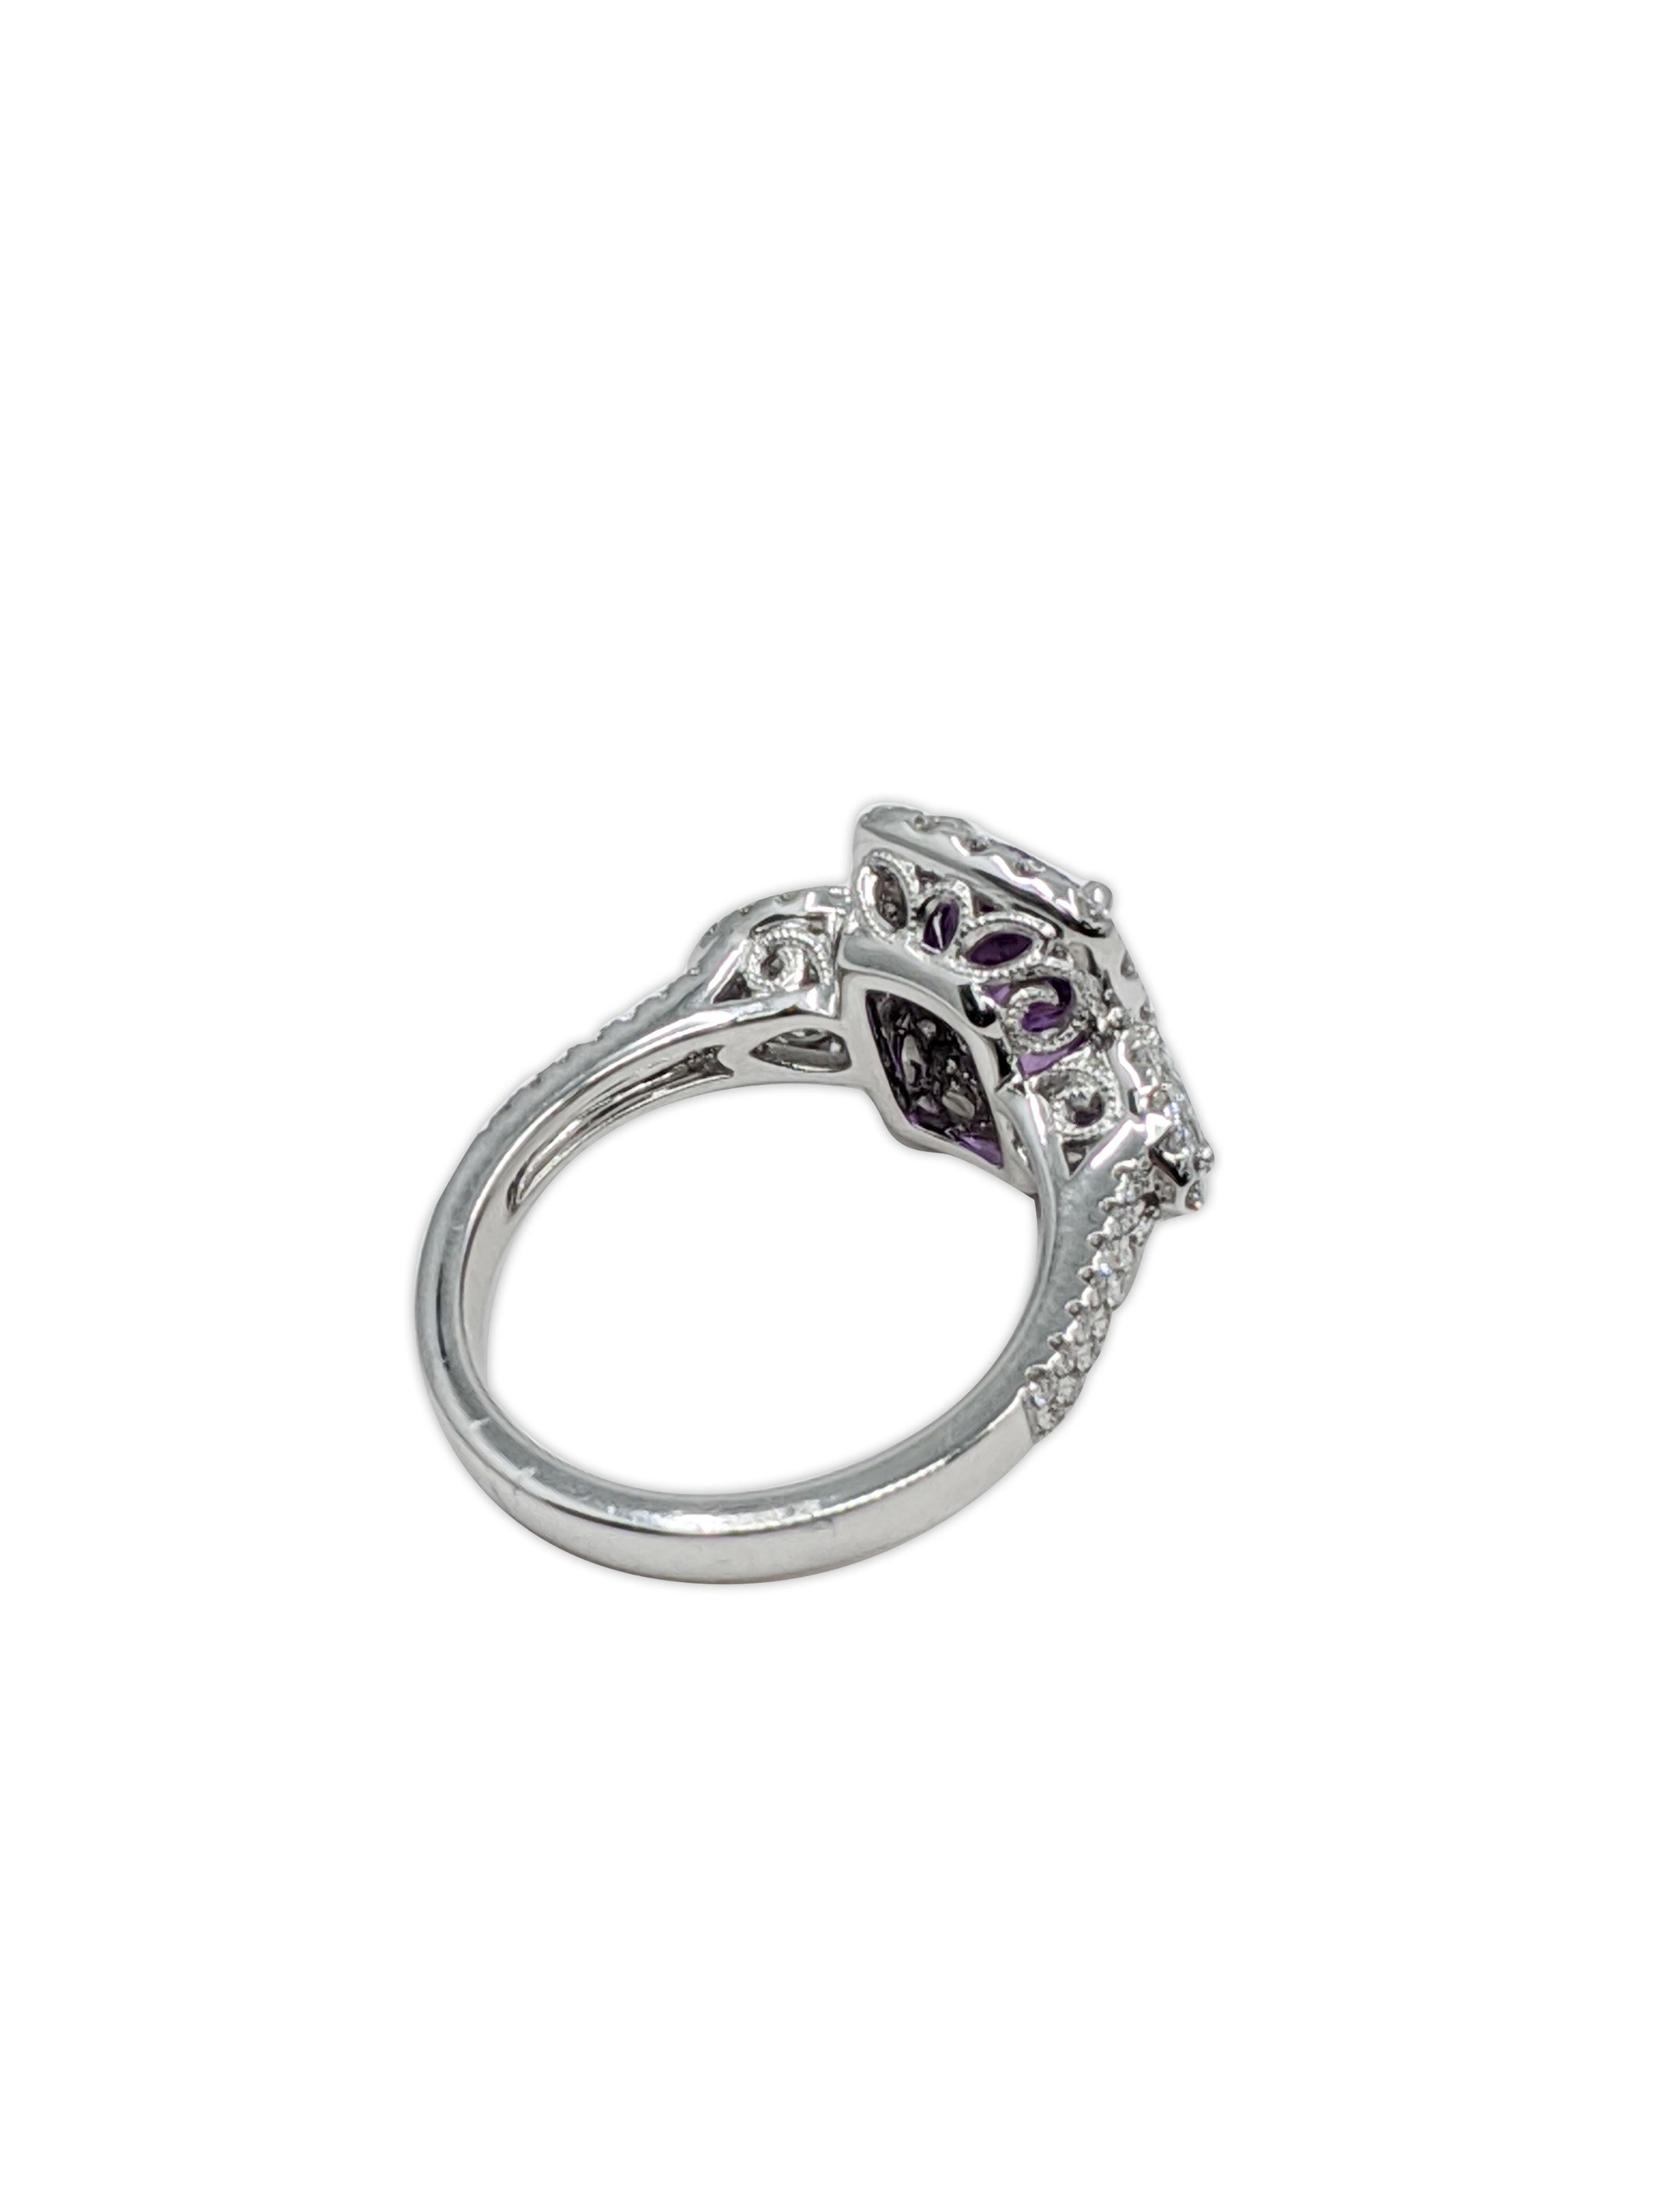 Women's Lavender Natural Sapphire 'No Heat' White Diamond Ring '18 Carat'  17534 For Sale